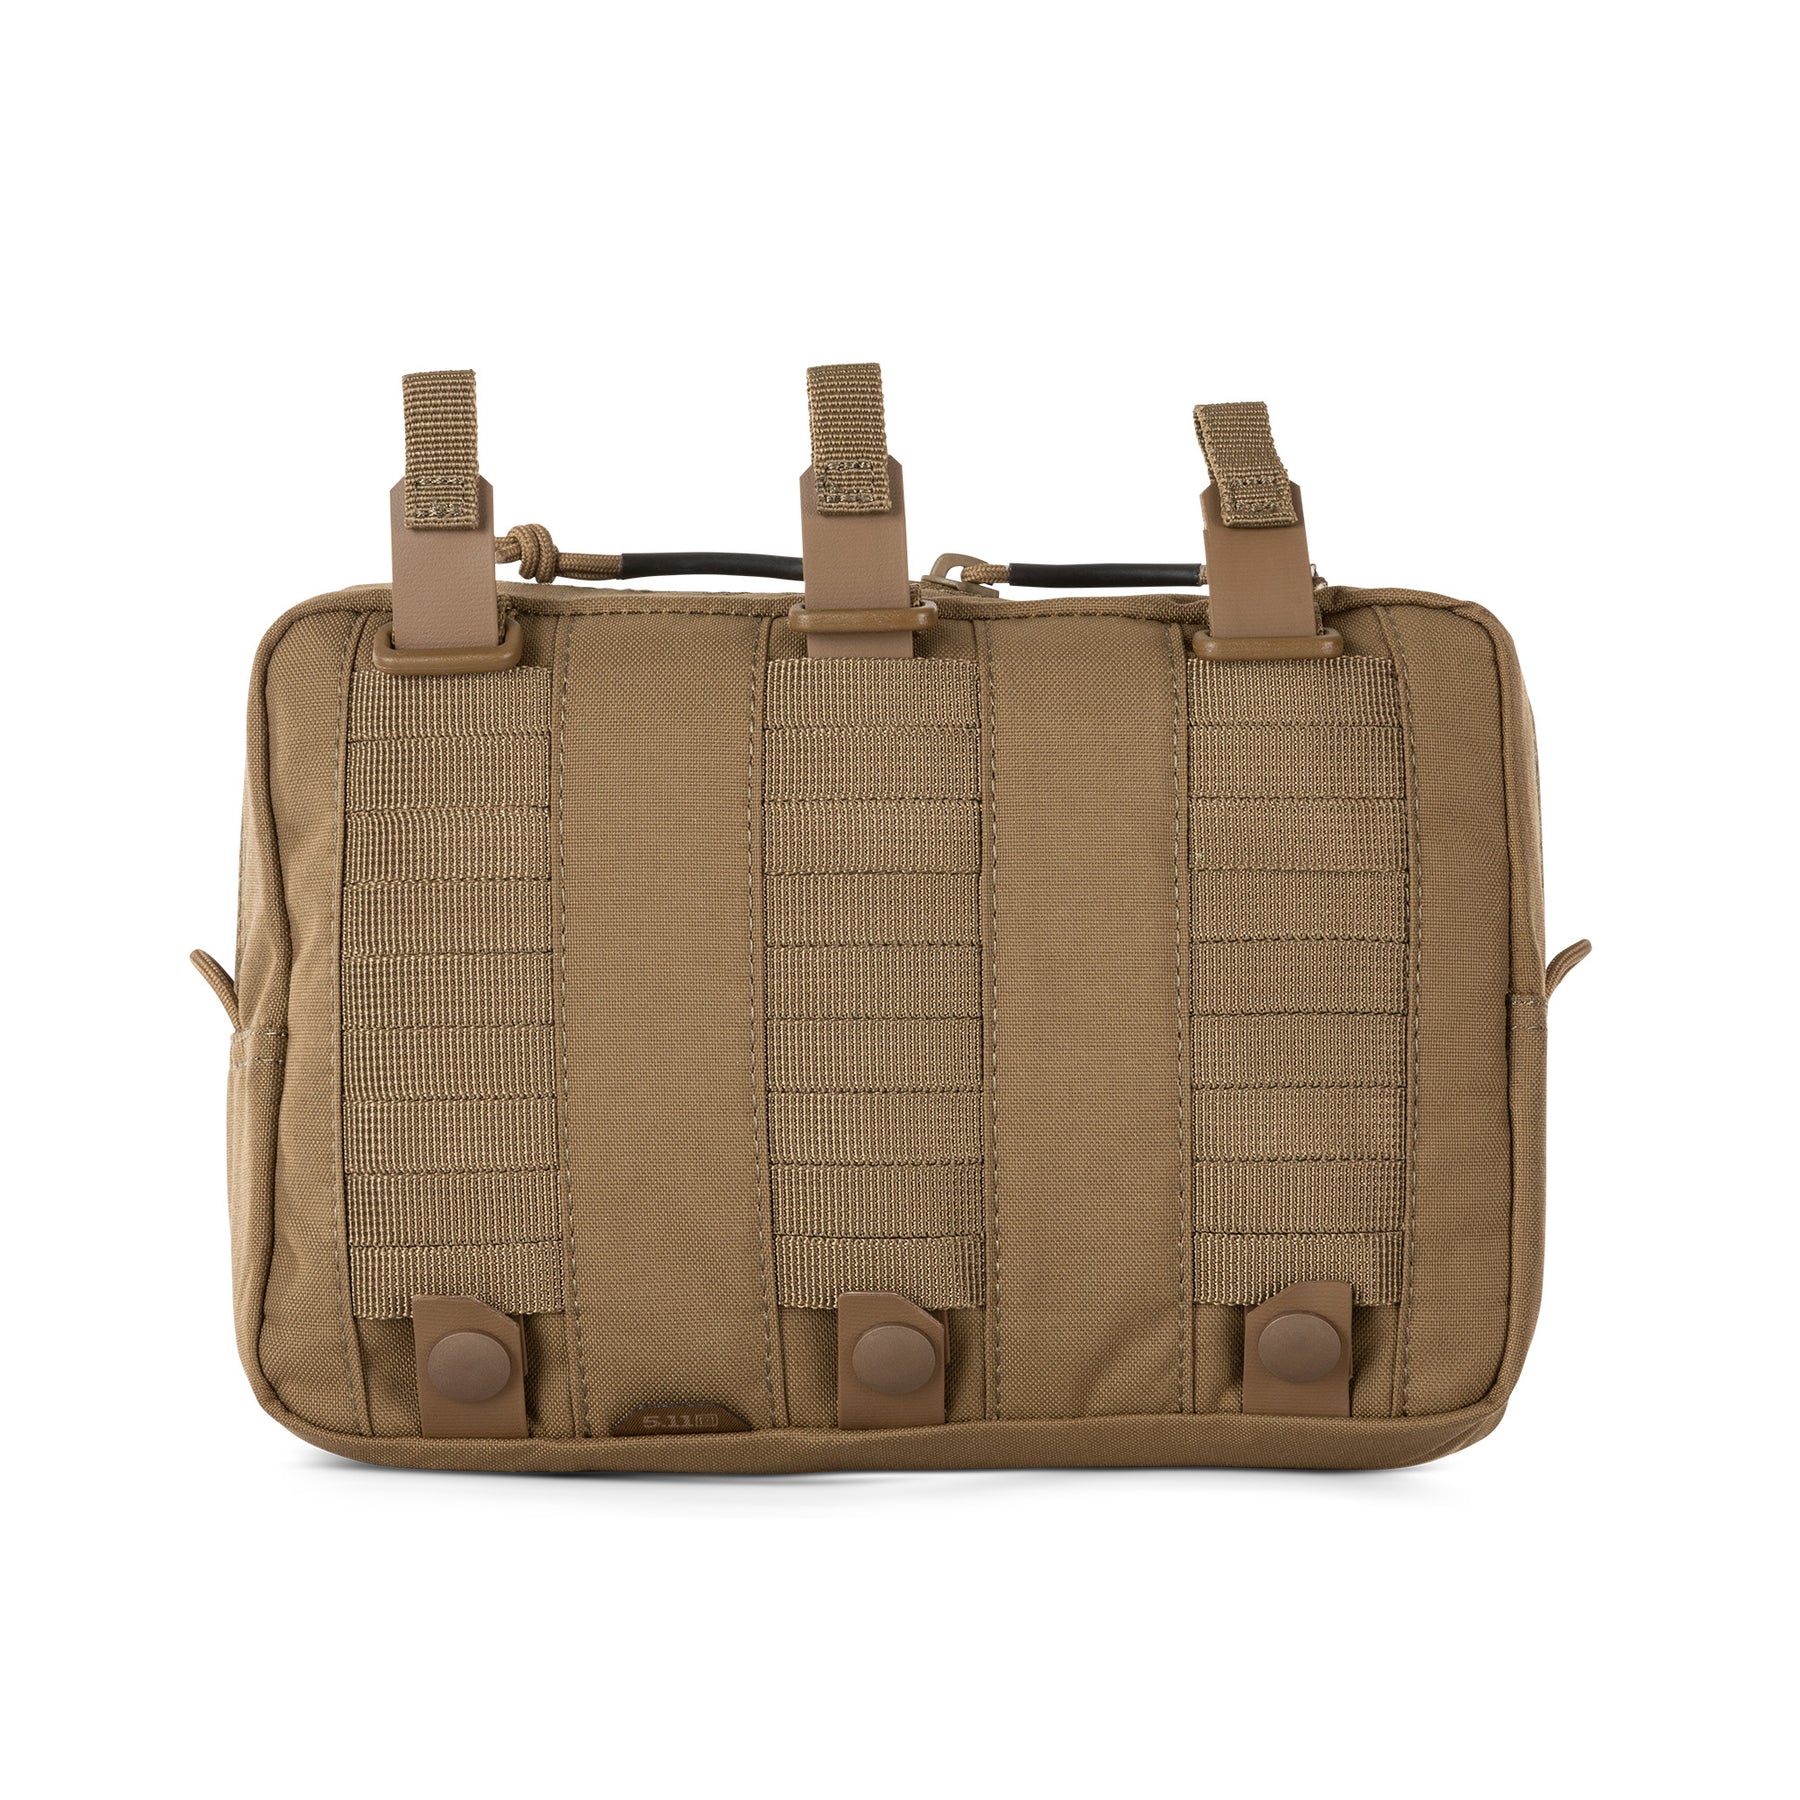 tasca MOLLE orizzontale 9x6 flex pouch di 5.11 sabbia (kangaroo) - vista retro e sistema Flex